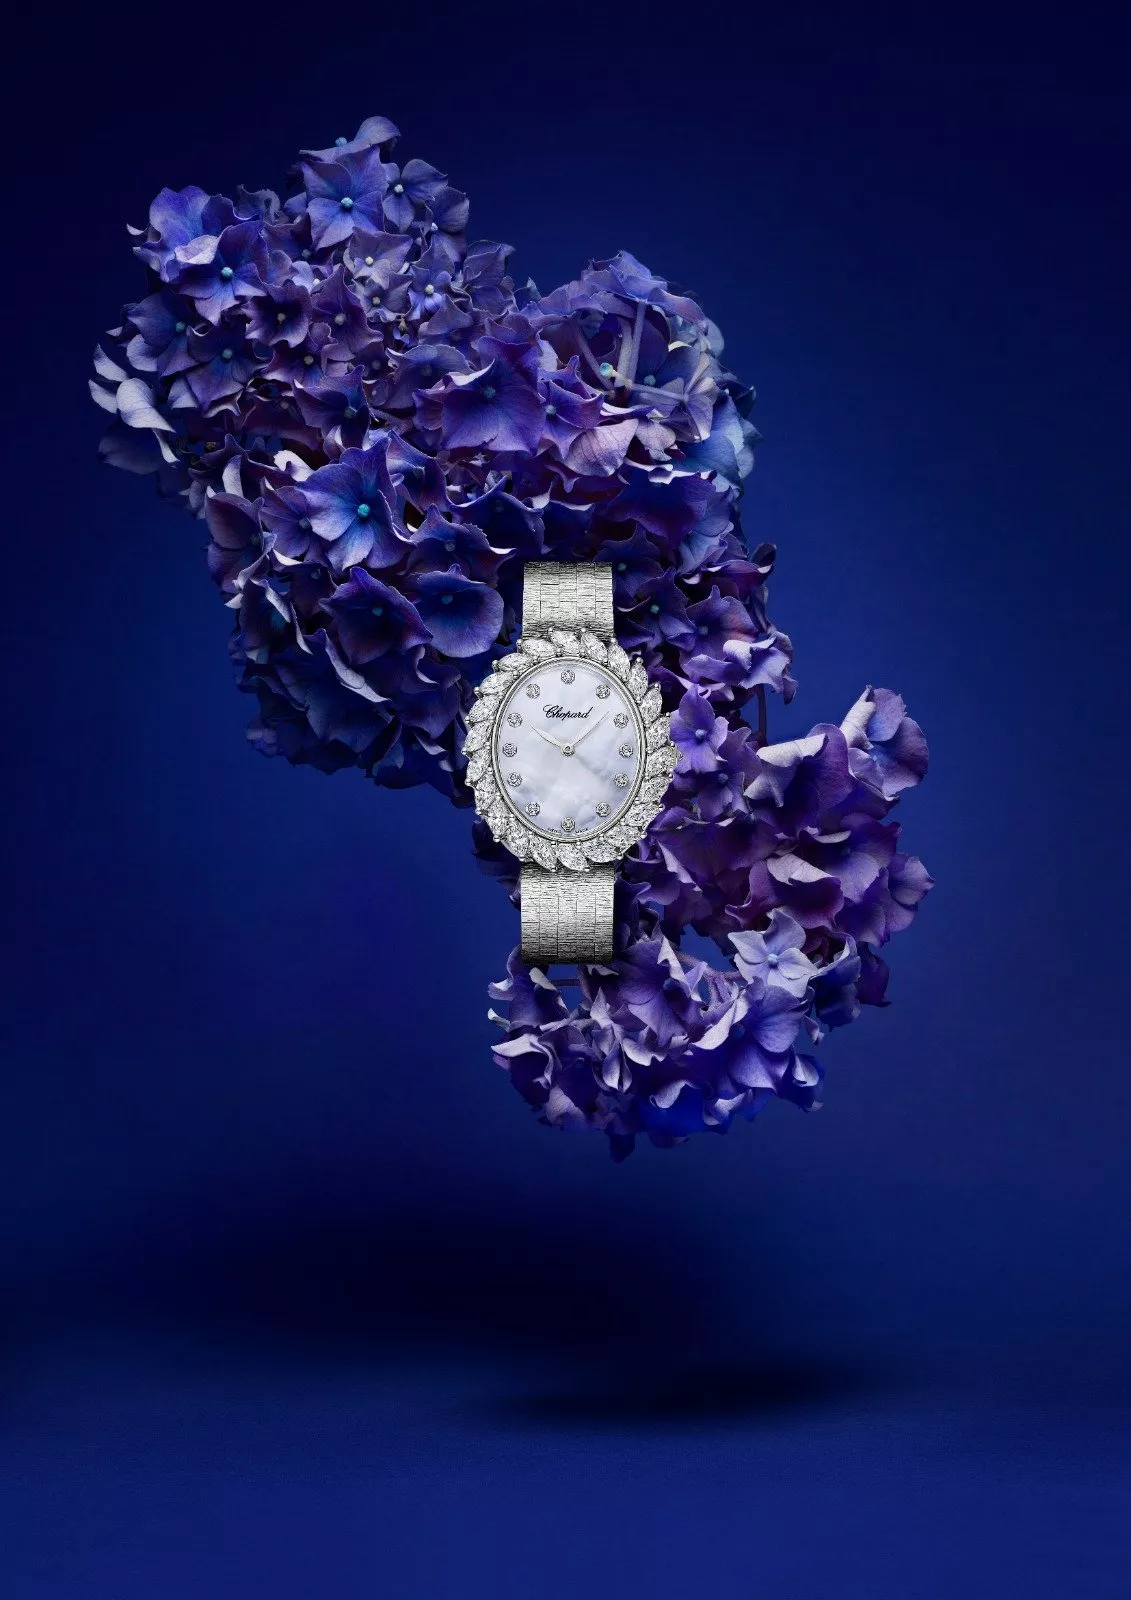 Chopard تضيف ساعة جديدة على المجموعة L’Heure du diamant... استعراض باهر لمهارات الدار